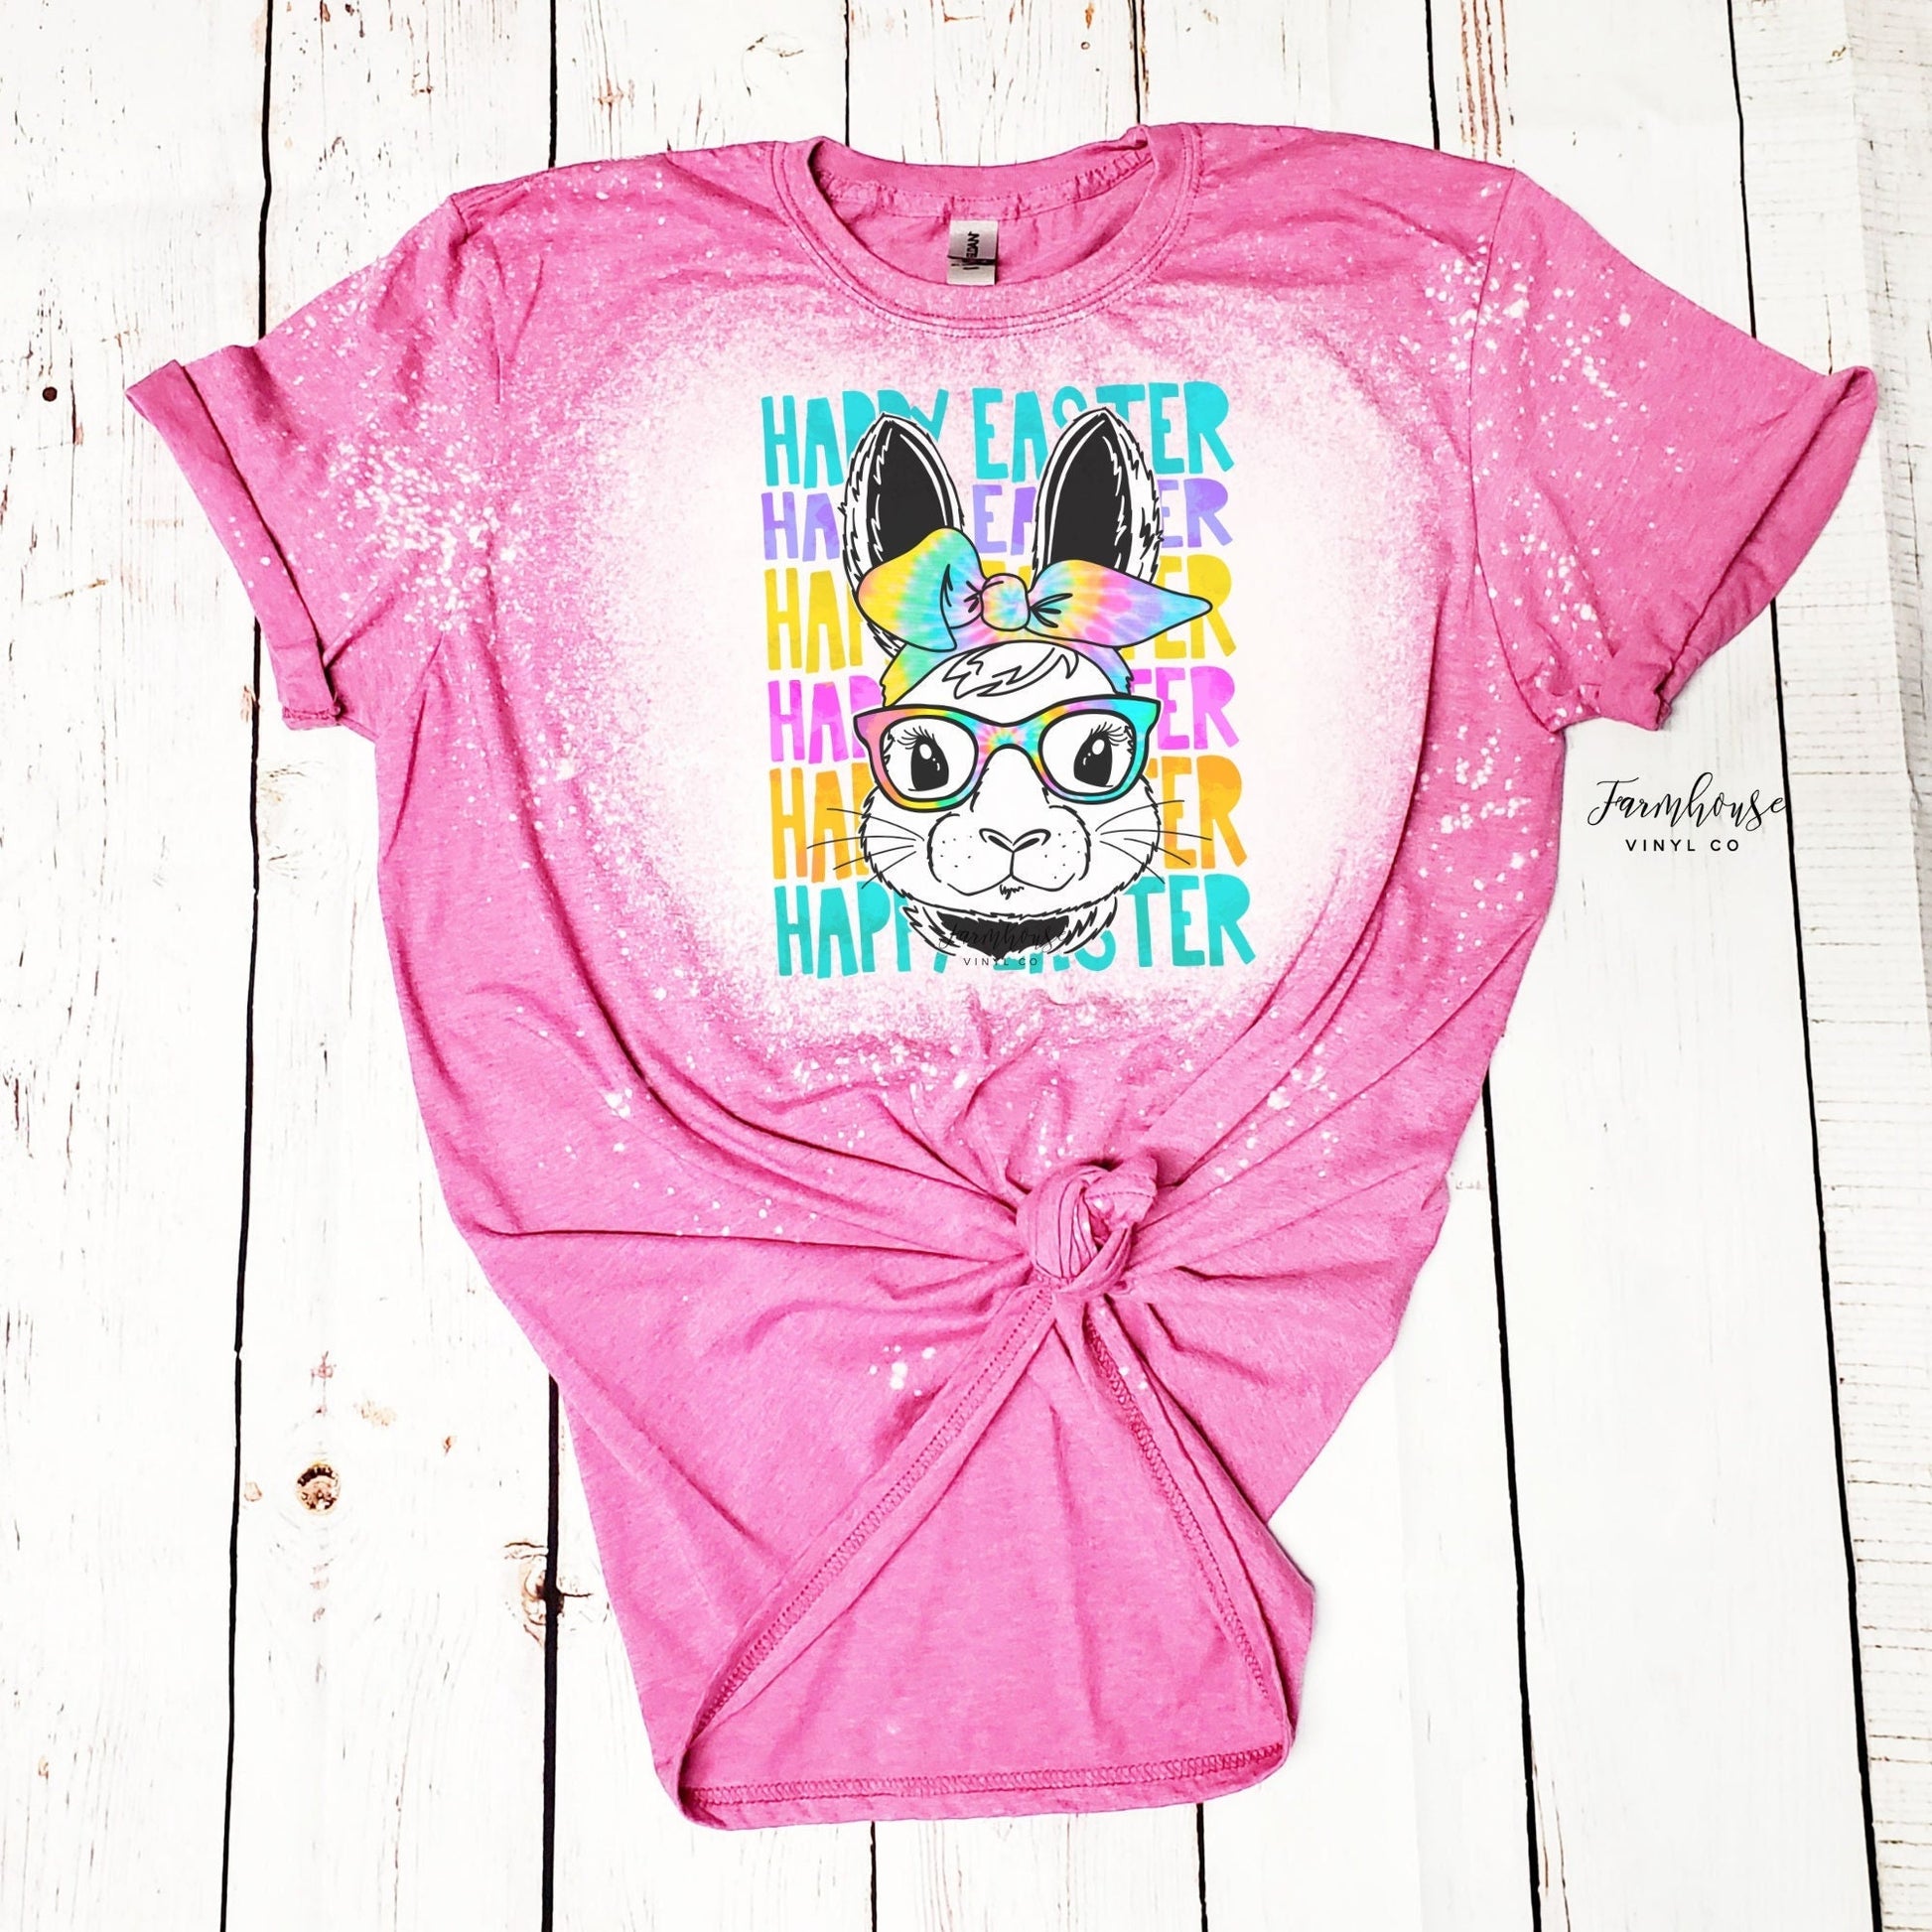 Happy Easter Tie Dye Bleached Shirt / Trendy tee shirt / Kids Easter T Shirt / Hipster Bunny Shirt / Easter Party T Shirt / Girl Bunny Shirt - Farmhouse Vinyl Co